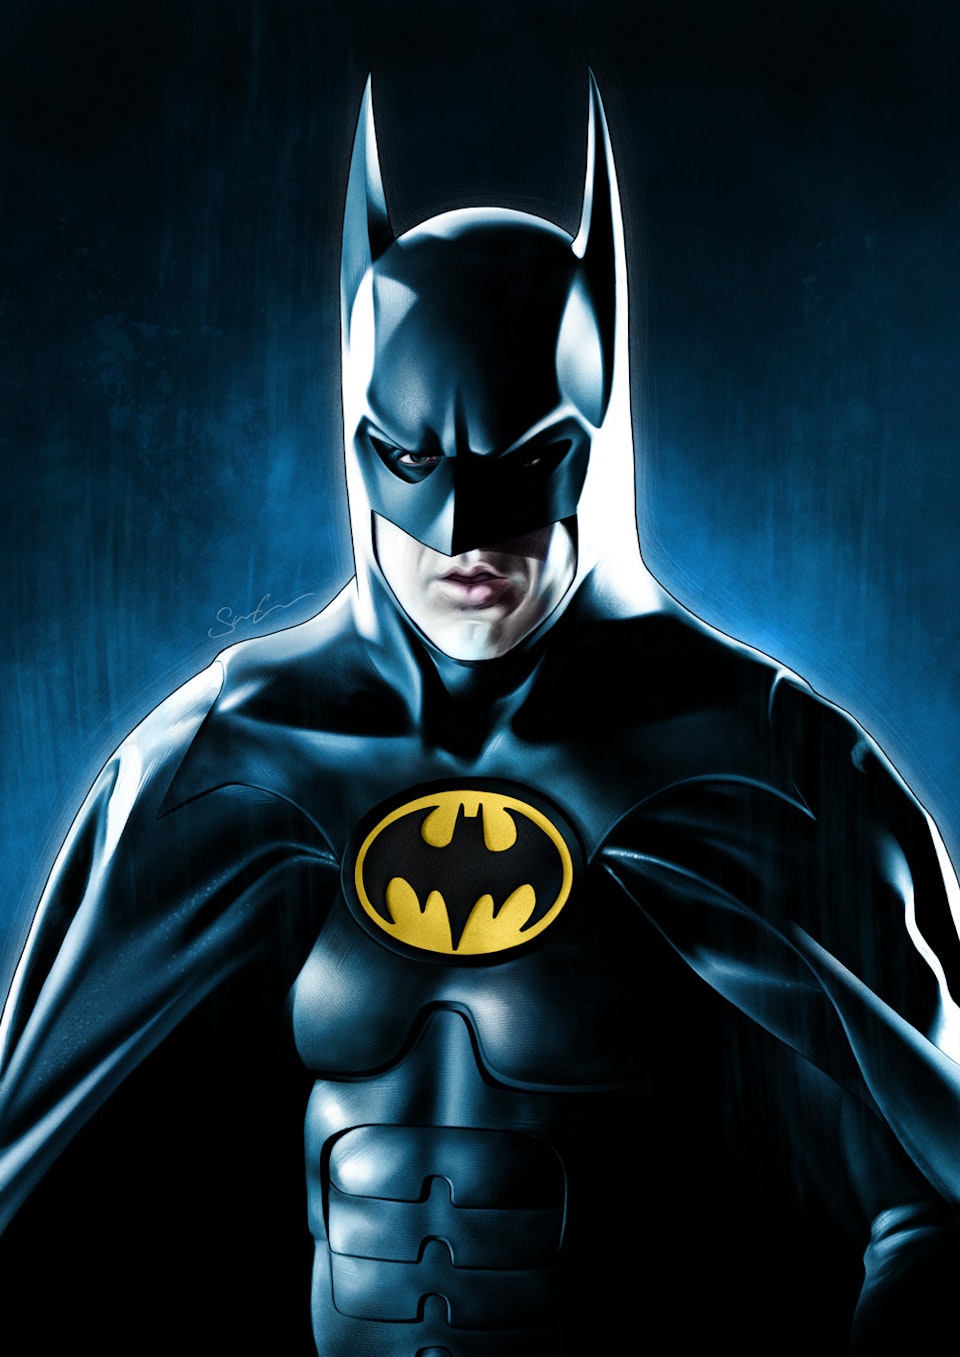 Batman Illustrations - Batman Returns

Illustrated and coloured in Procreate.